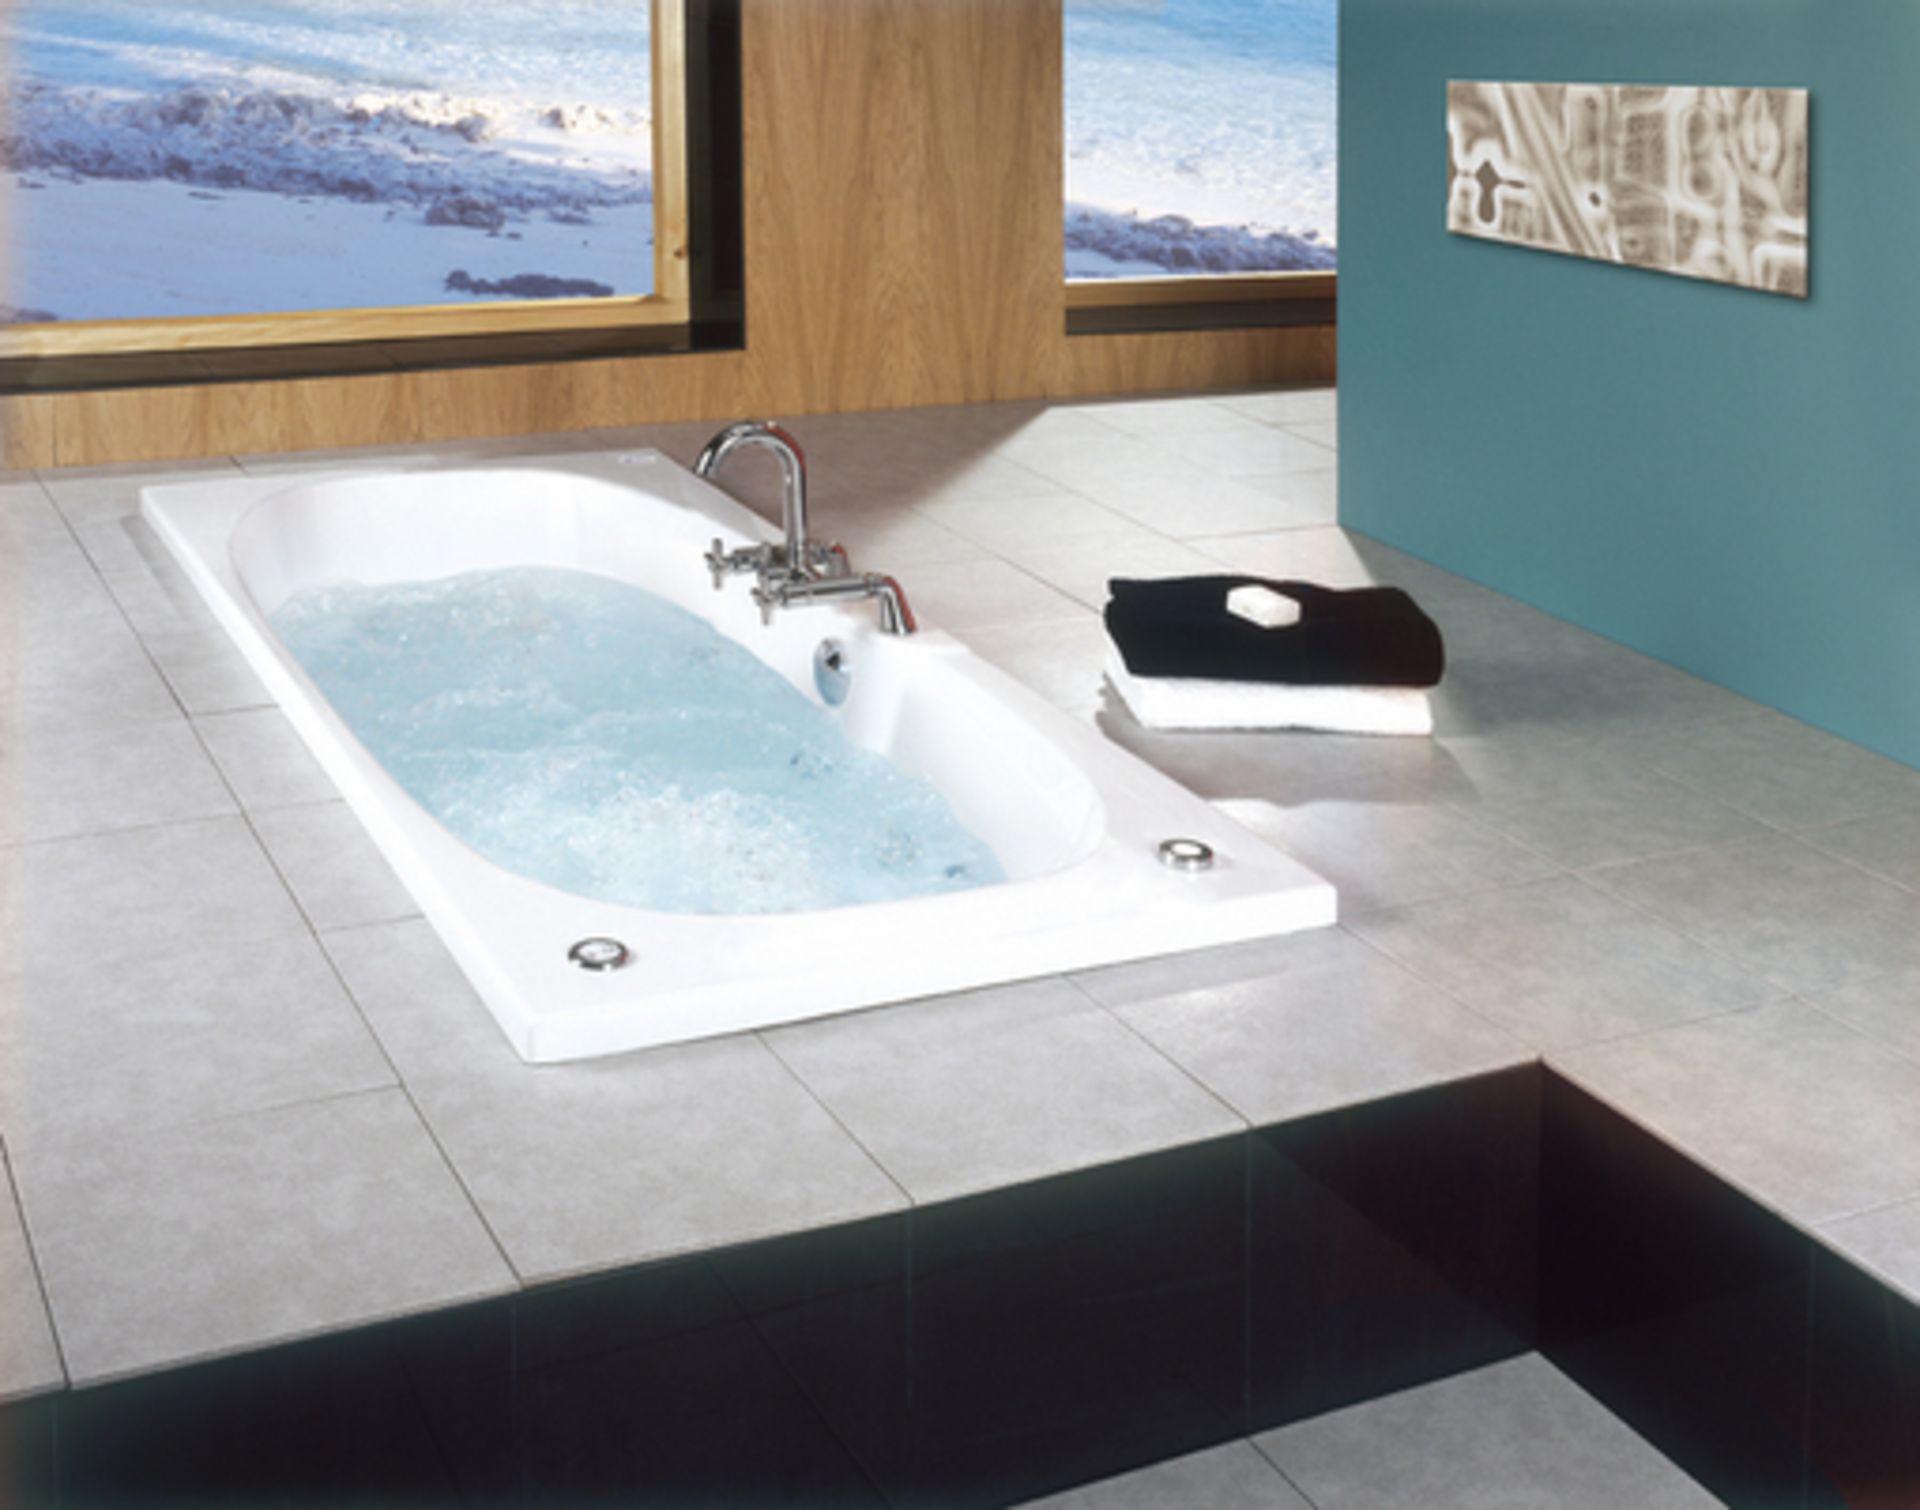 1 x Vogue Bathrooms Havari 1800x800mm Double Ended Inset Acrylic Bath - Stylish Modern Design - - Image 2 of 5